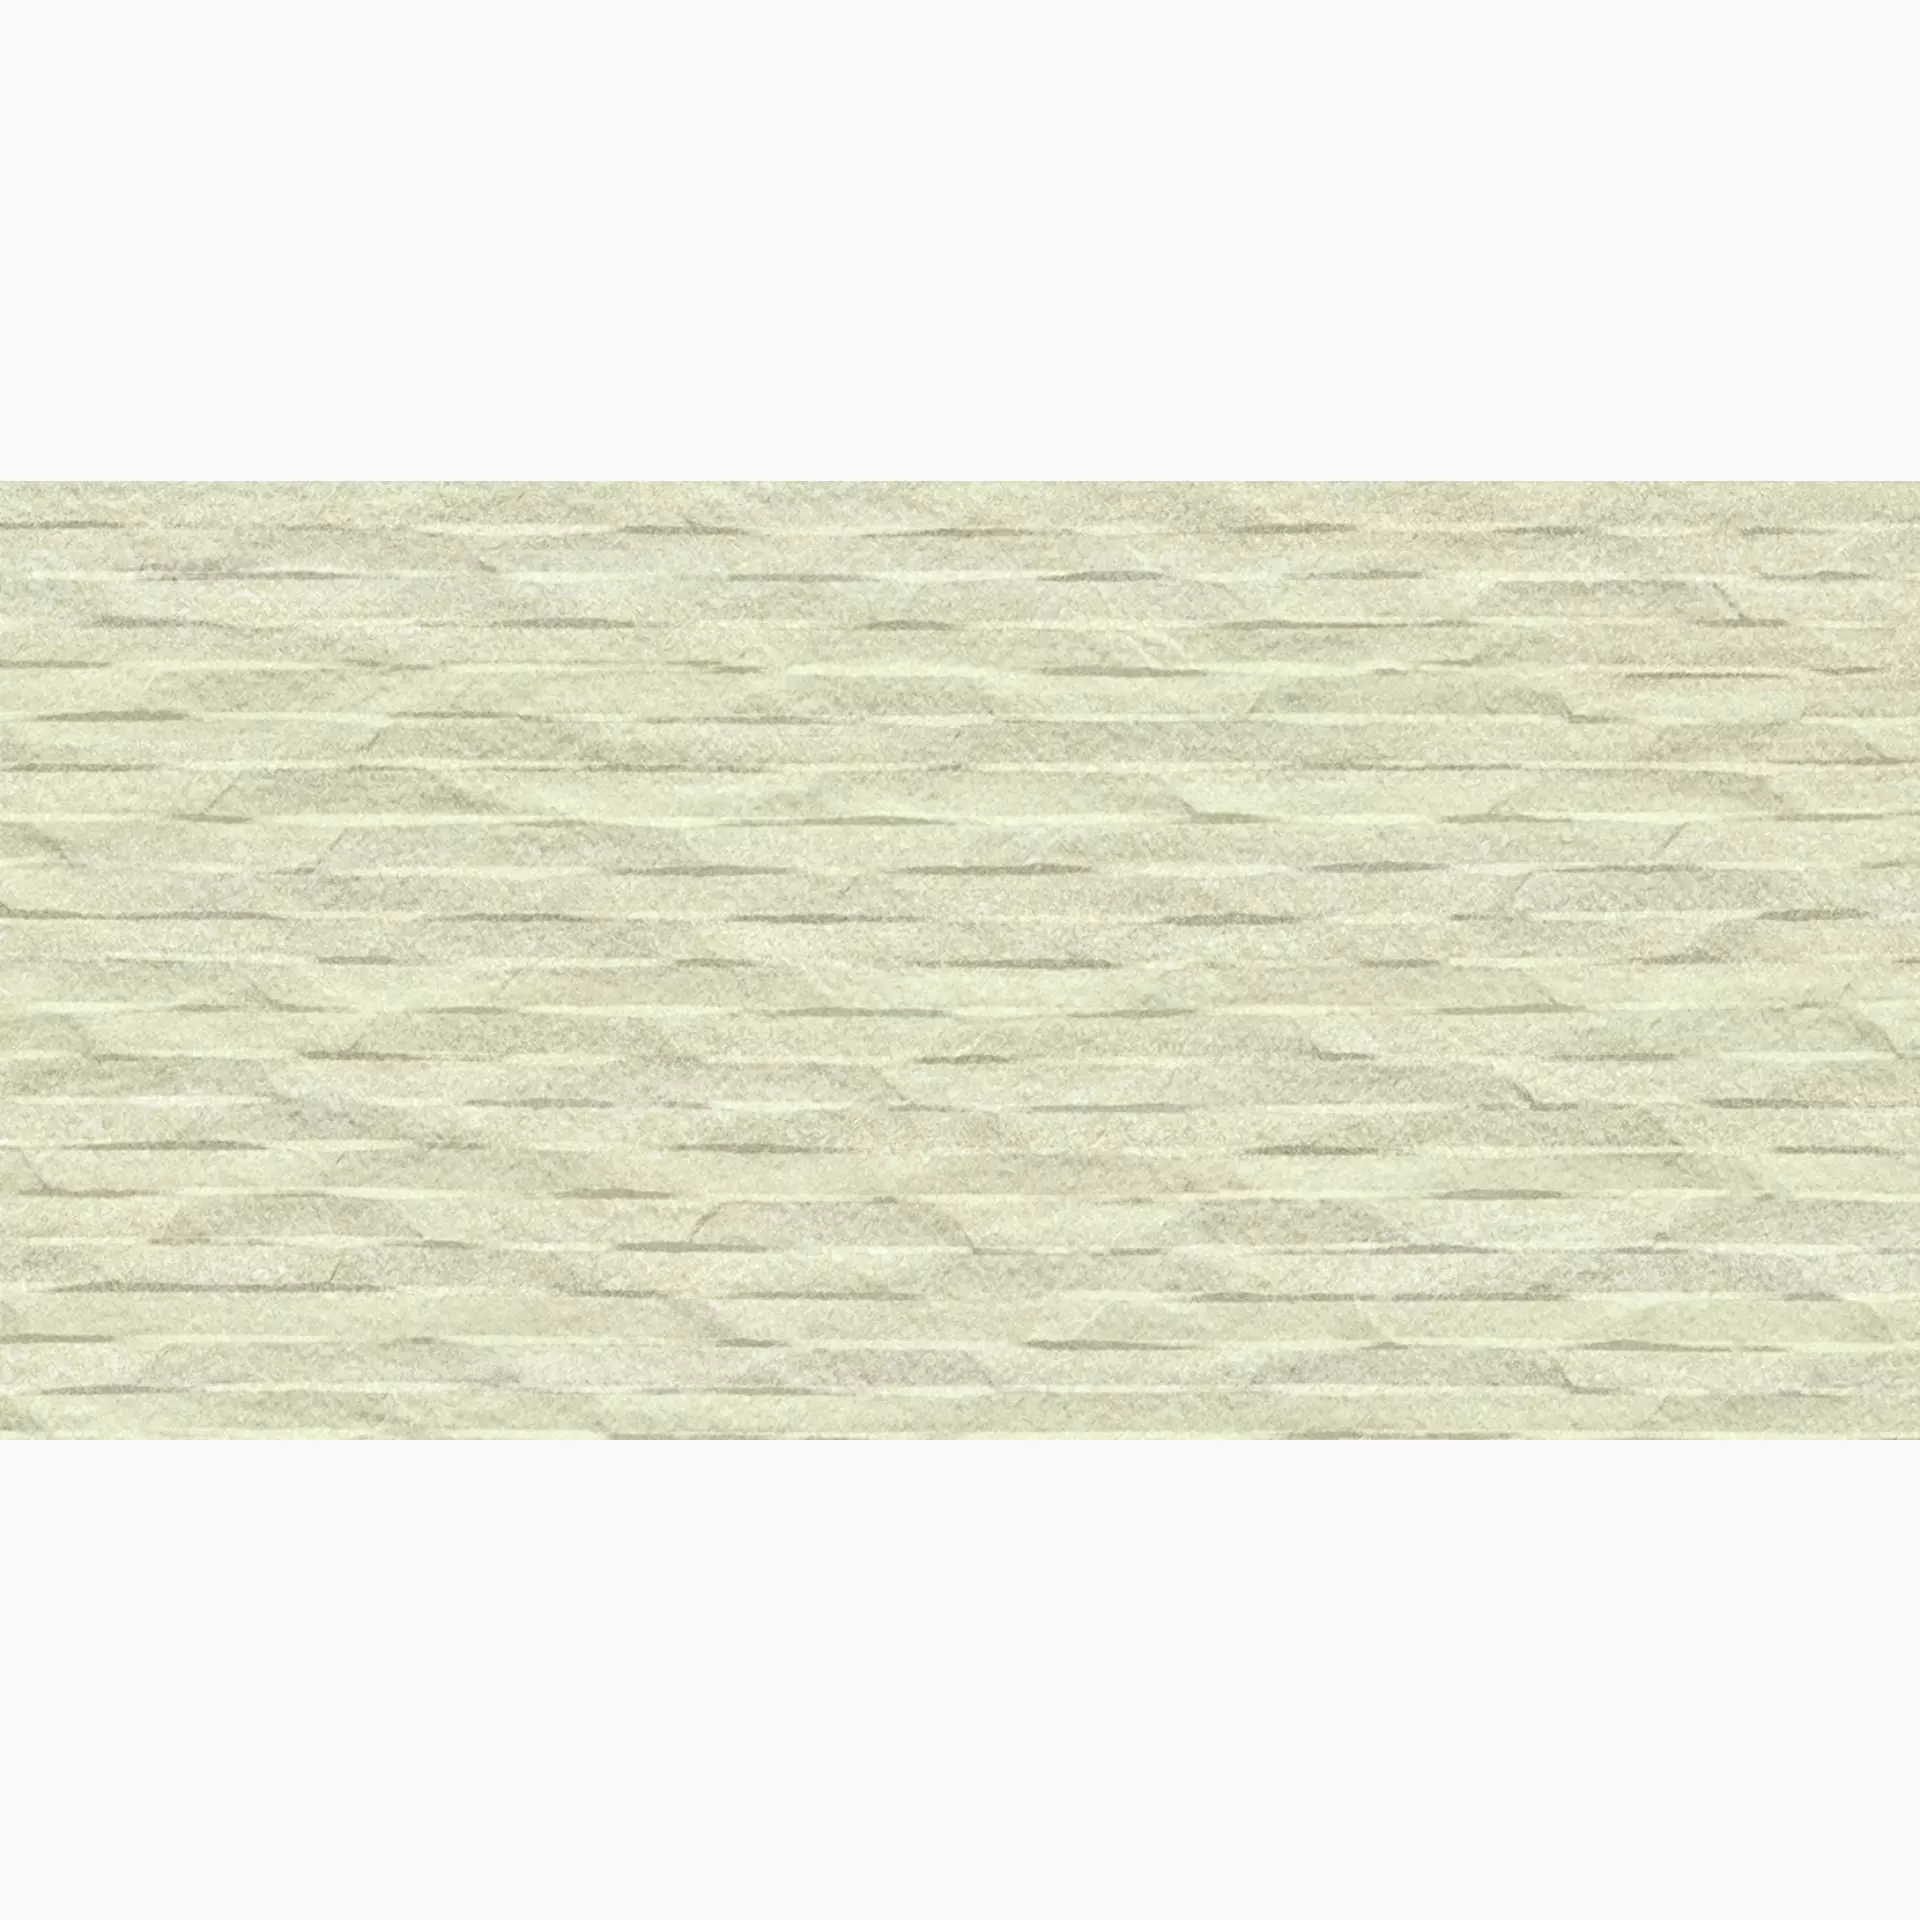 Ergon Elegance Pro Ivory Naturale Mural EK87 30x60cm rectified 9,5mm